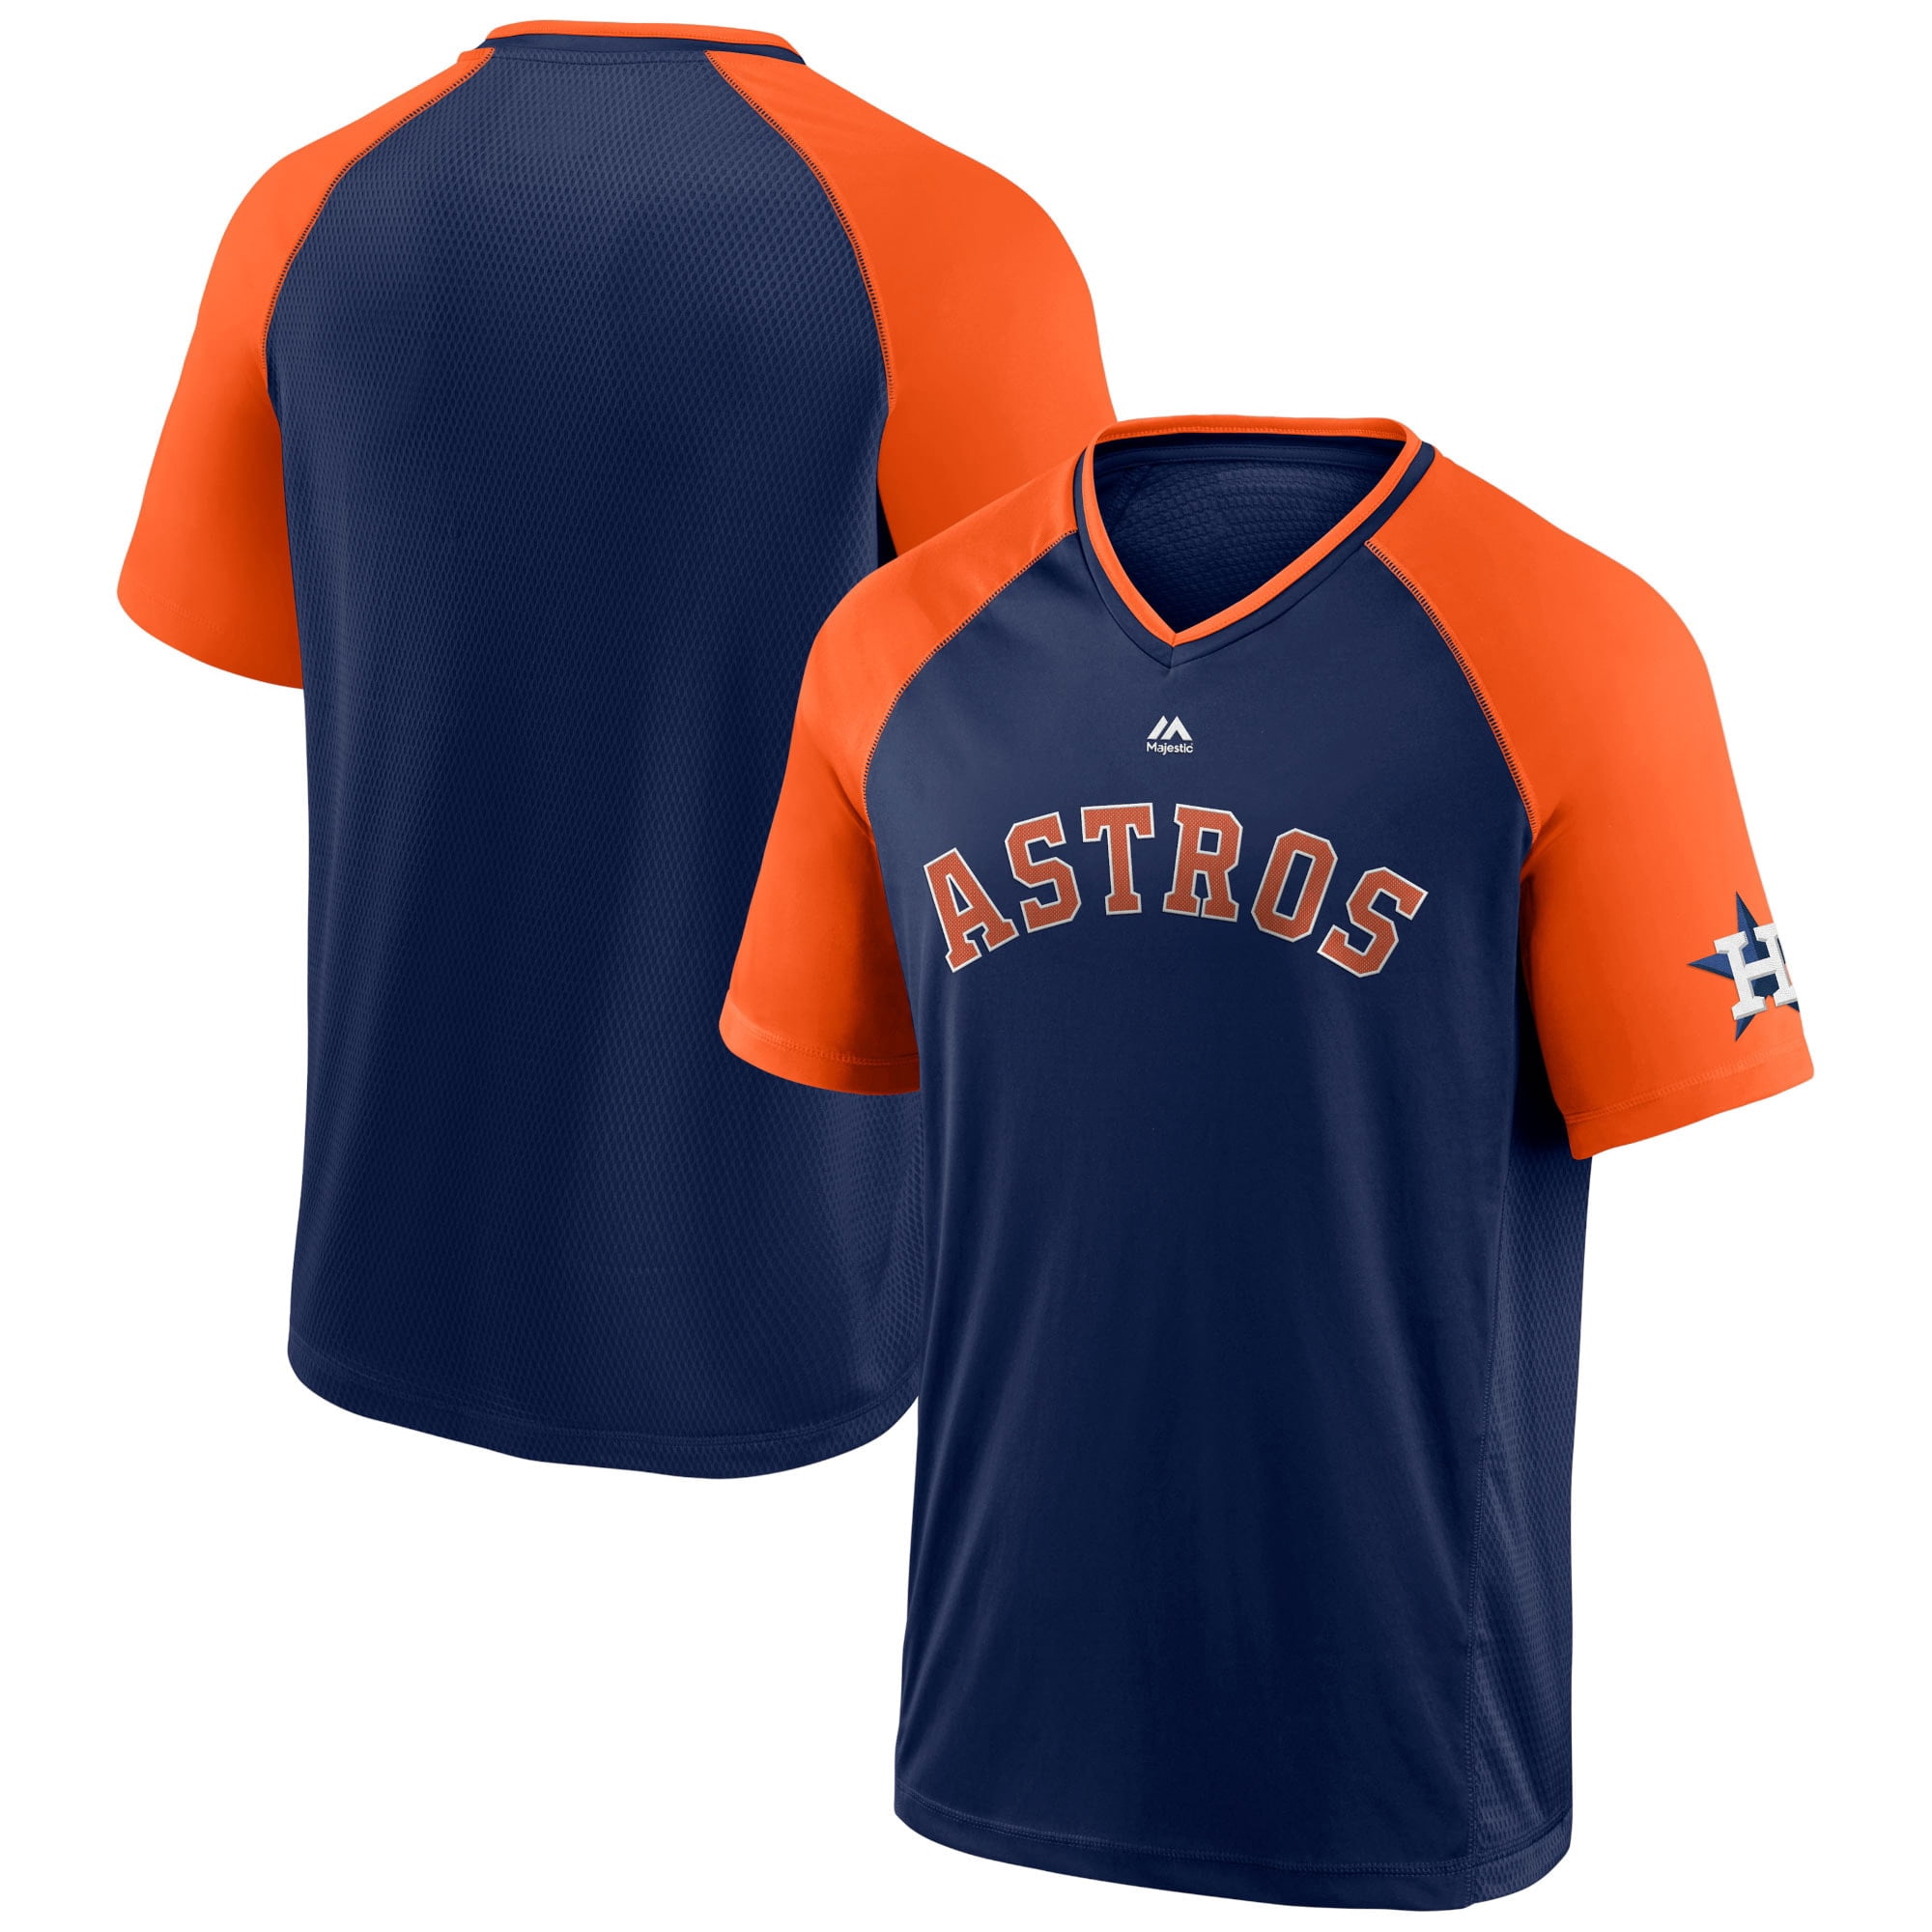 Men's Majestic Navy/Orange Houston Astros City Rep Closer Raglan V-Neck  T-Shirt